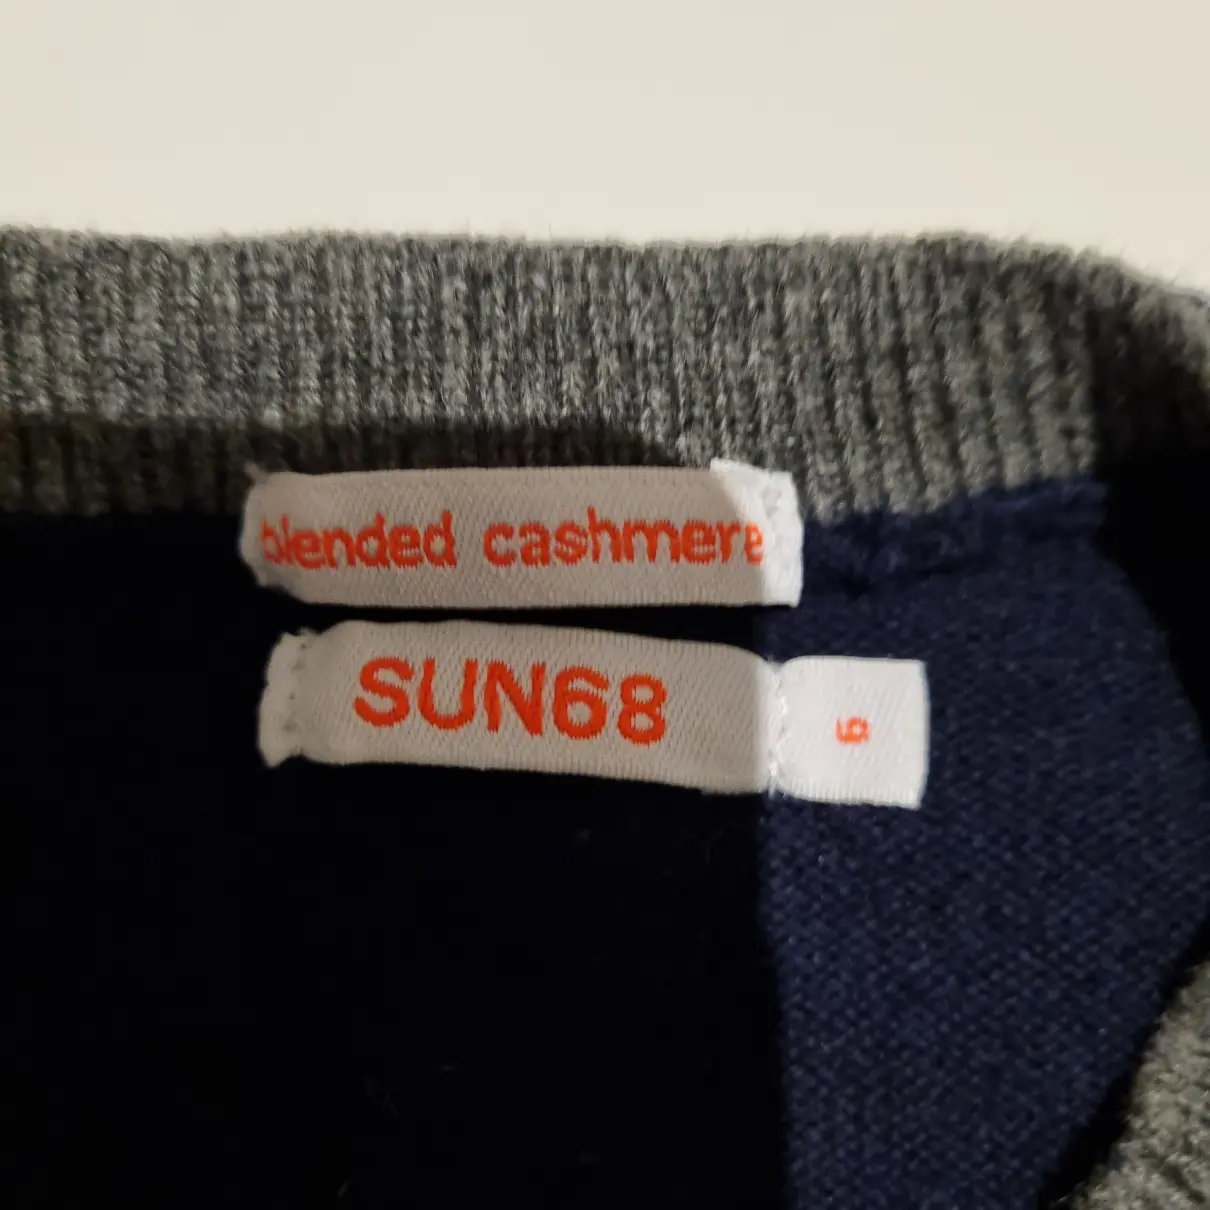 Buy Sun 68 Cashmere sweater online